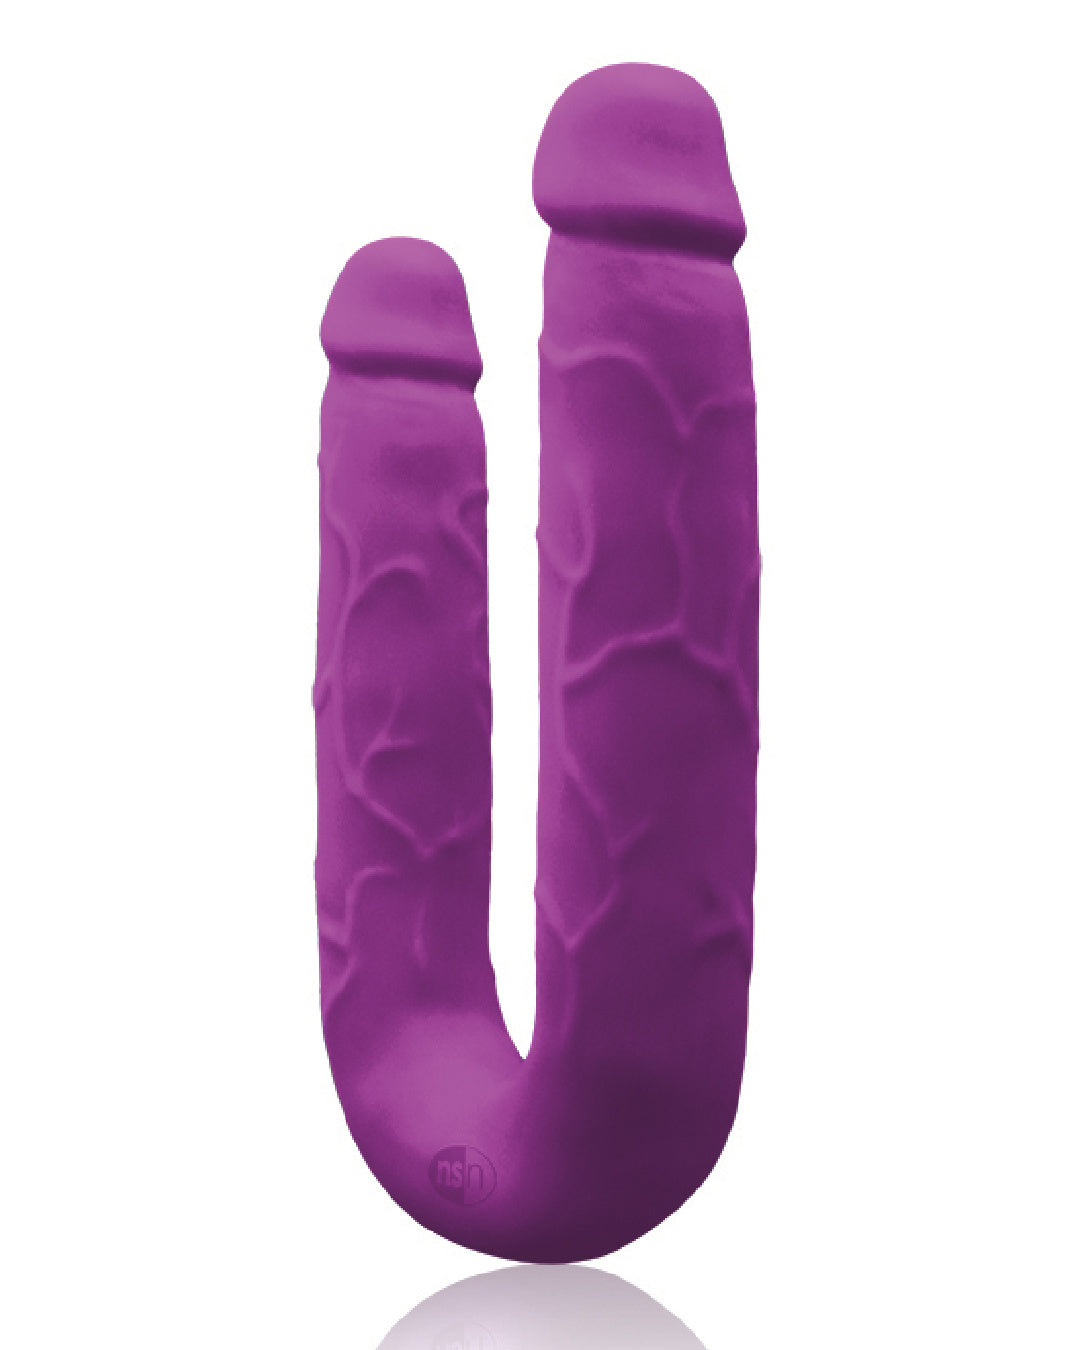 Colours Double Penetration U Shaped Dildo - Purple on a white background